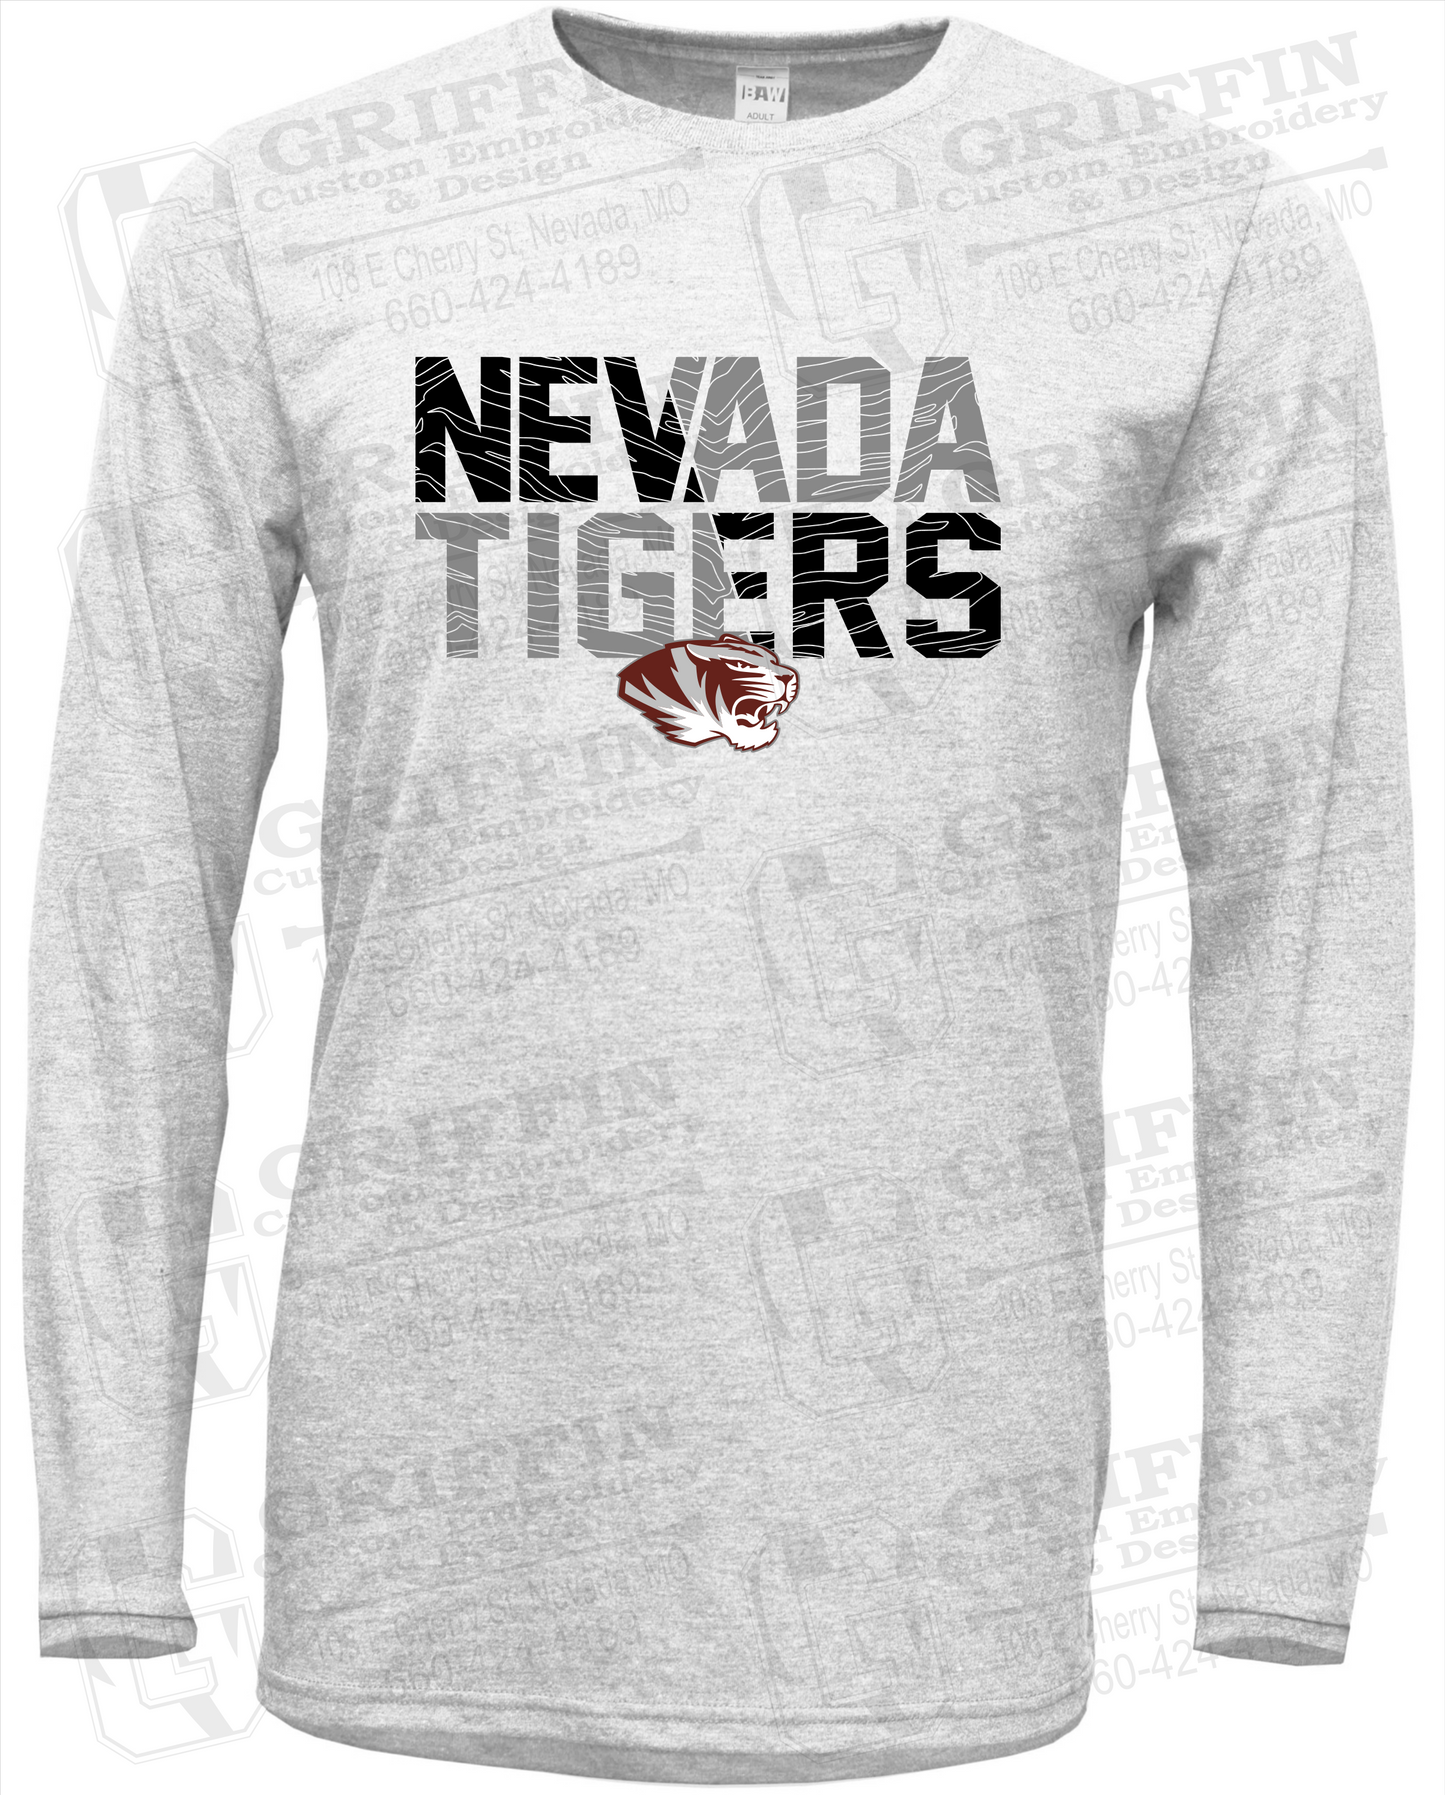 Soft-Tek Long Sleeve T-Shirt - Nevada Tigers 23-L